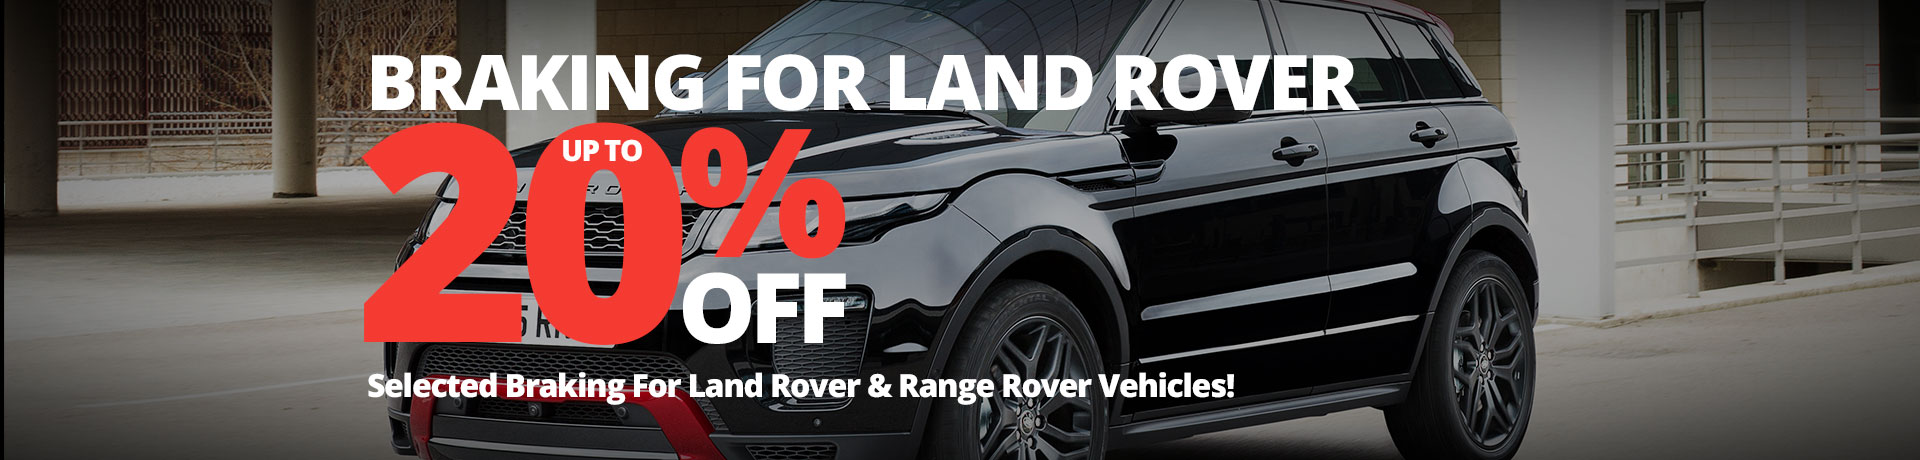 Up to 20% off Land Rover Braking